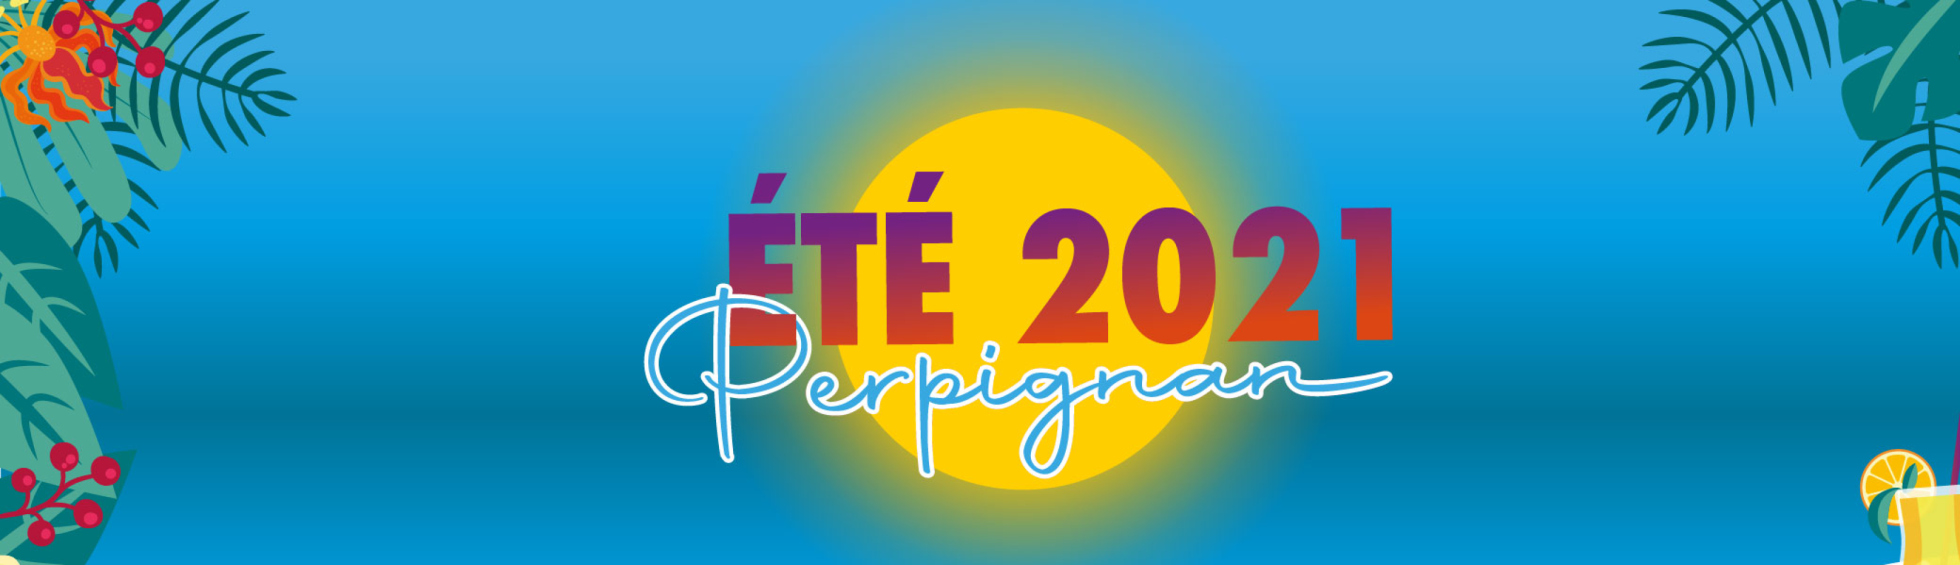 Programmation estivale 2021 - Perpignan